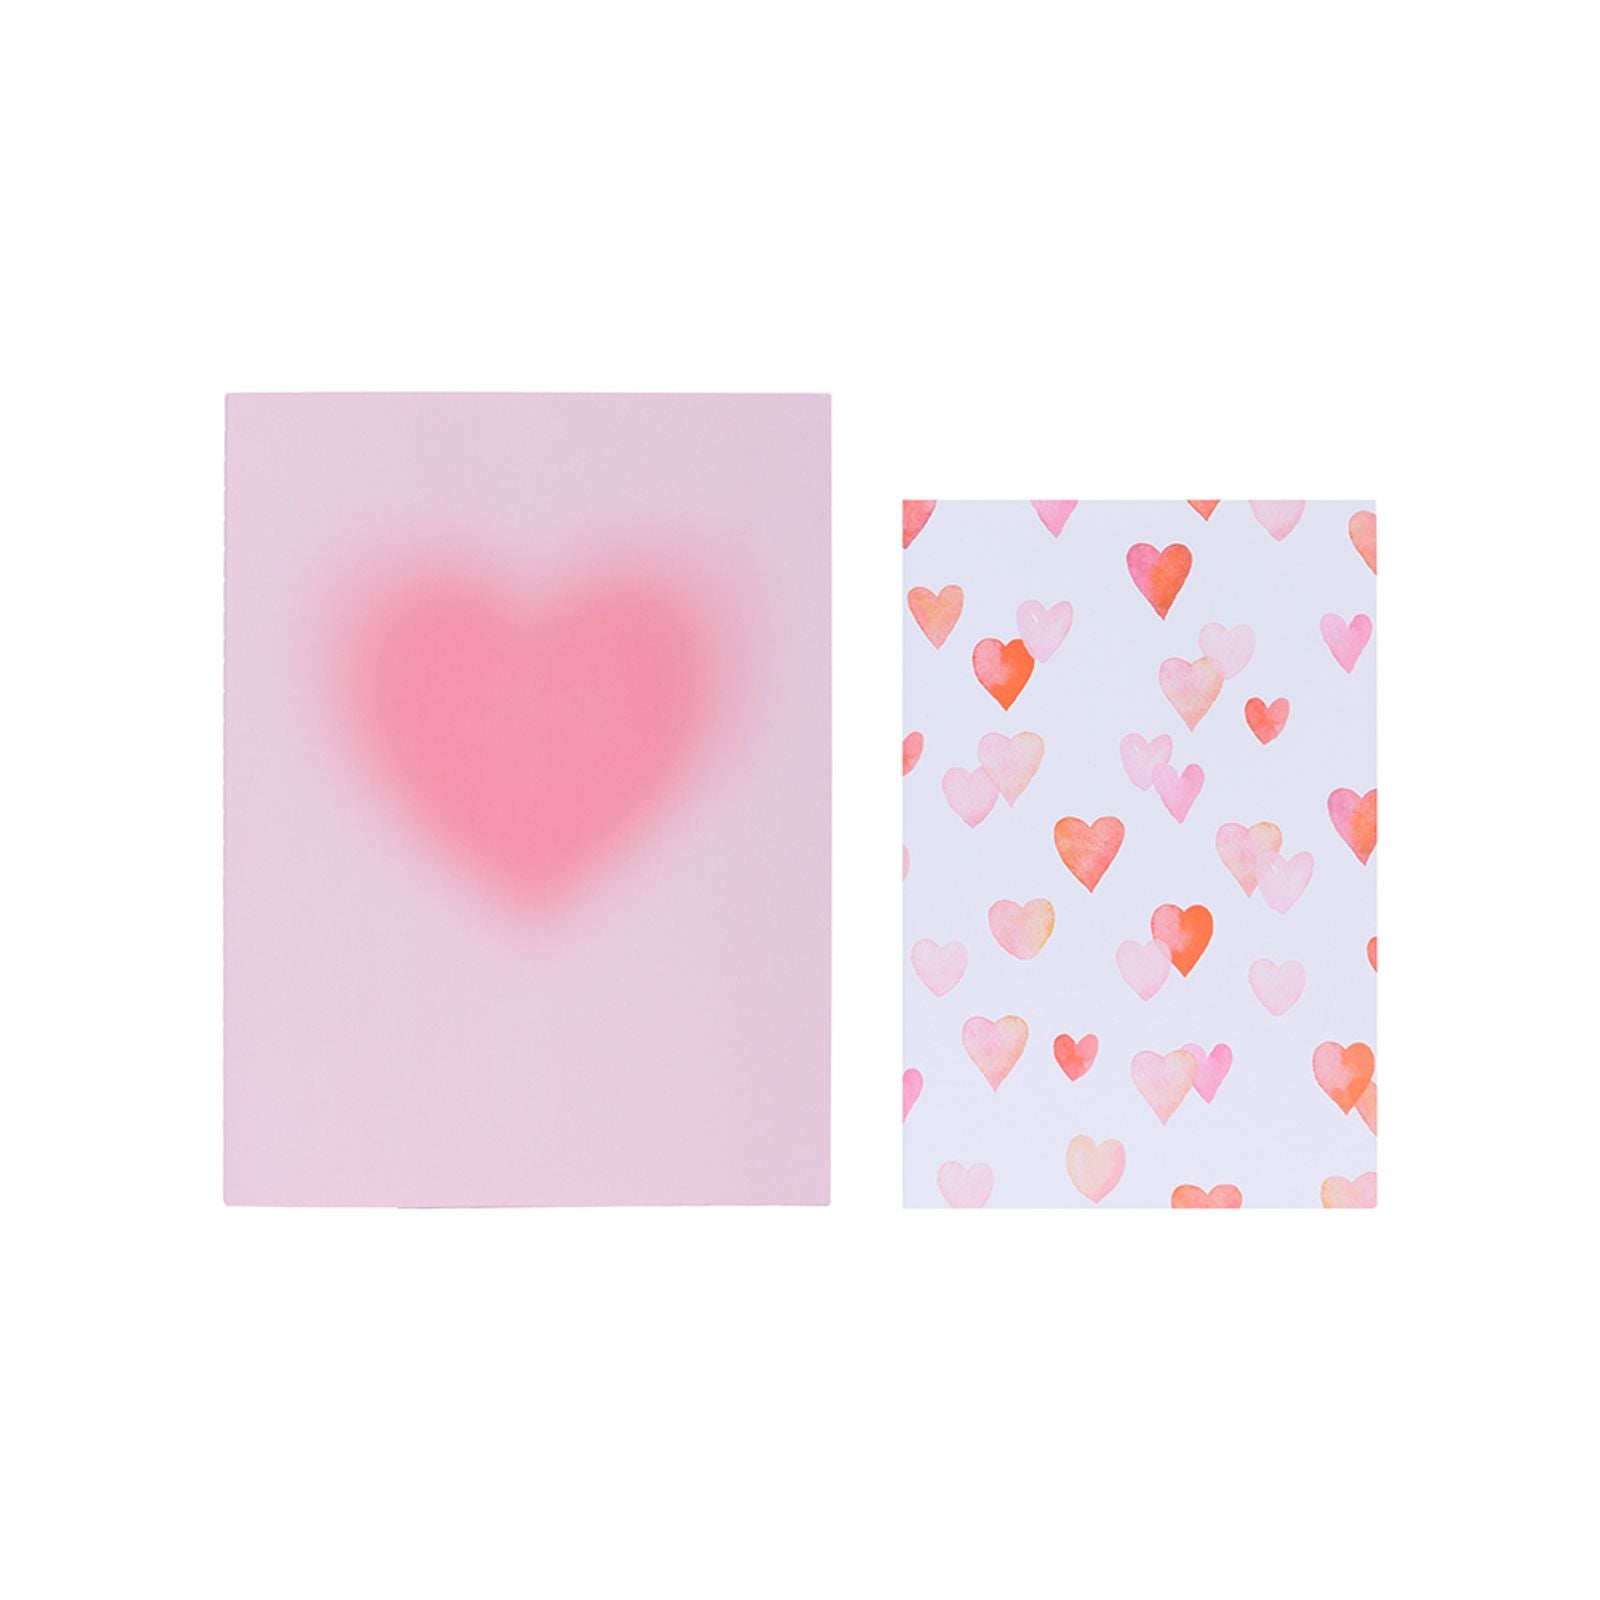 MINISO PINK ROMANCE SERIES A5 & B5 STITCH-BOUND BOOK SET ( 32 SHEETS ) ( HEART ) PDQ 2015284910103 STATIONERY & GIFT